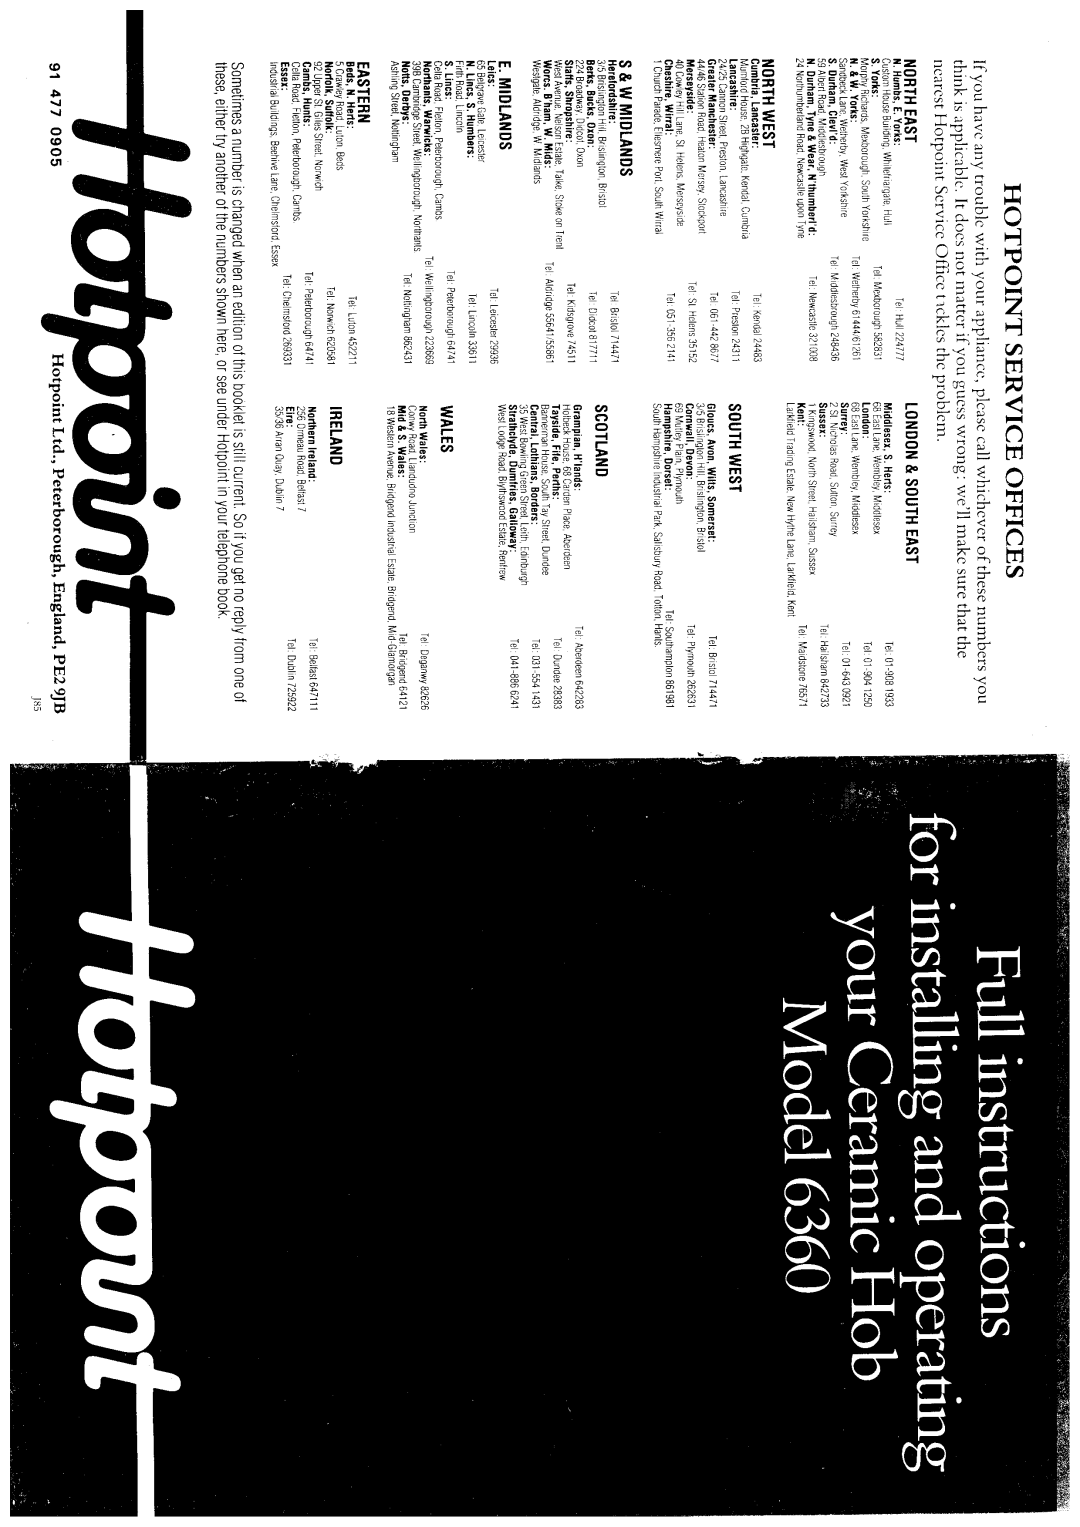 Hotpoint 6360 manual 